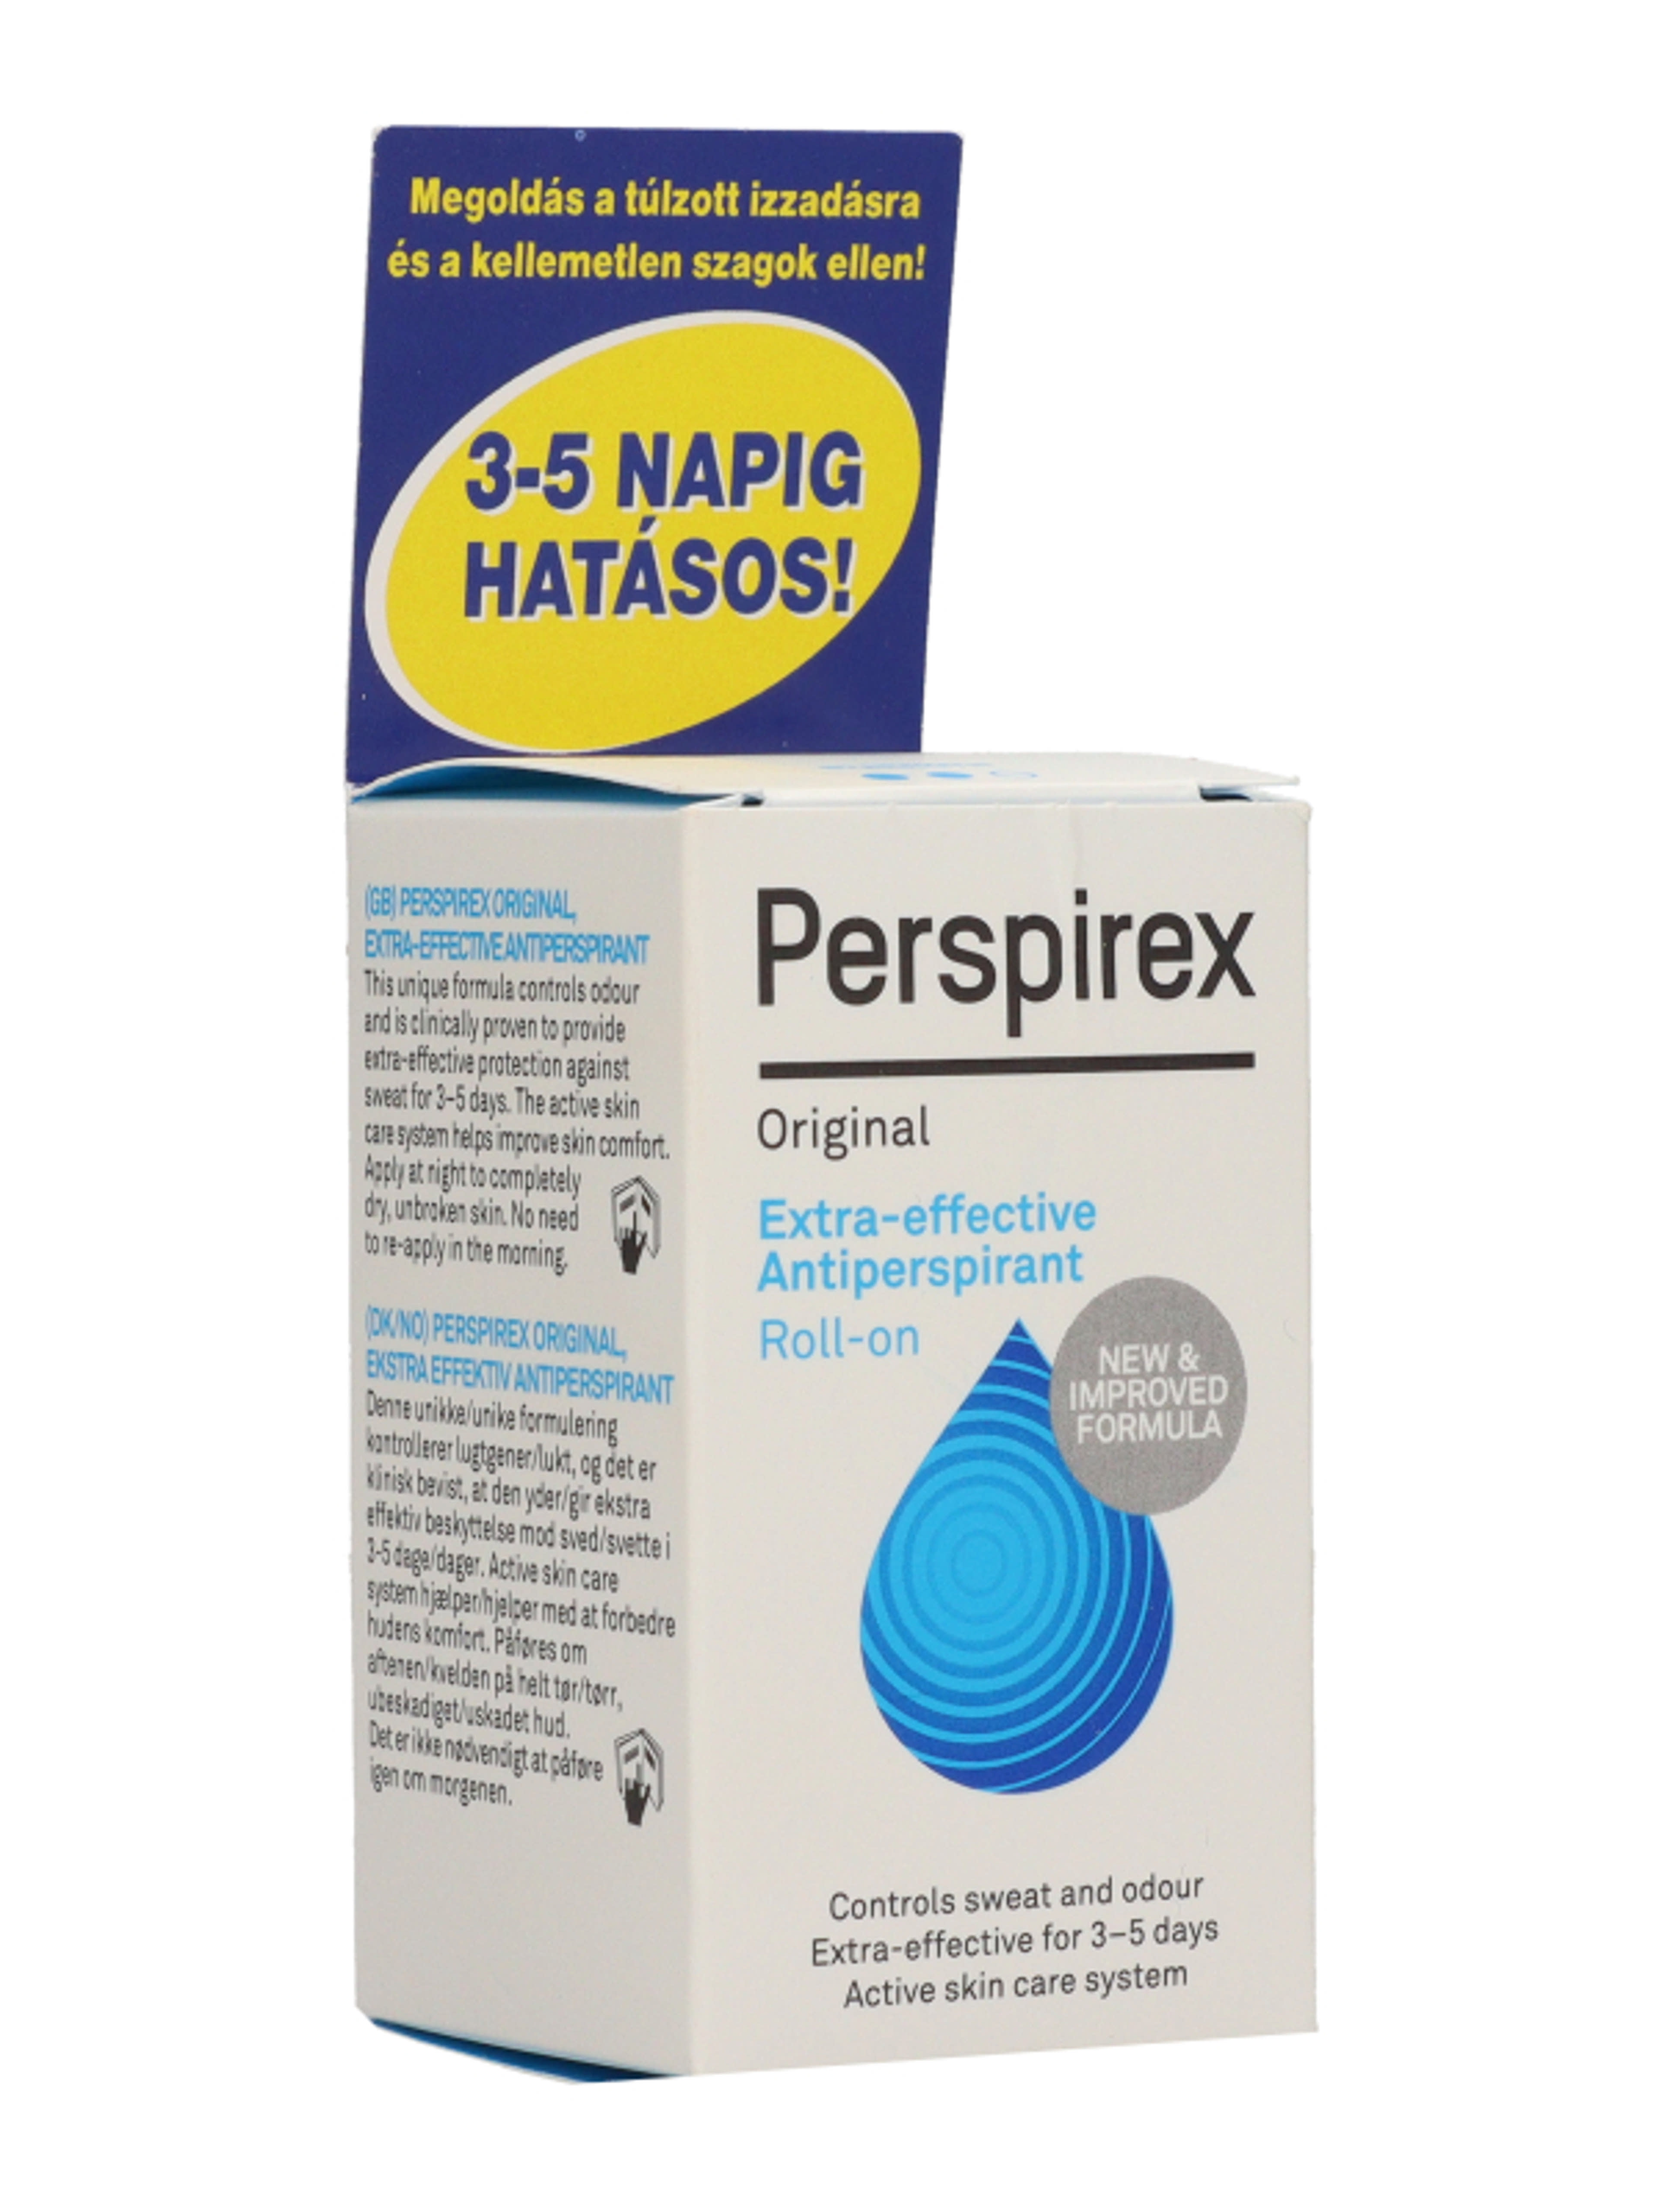 Prespirex Original speciális izzadságátló roll-on - 20 ml-5